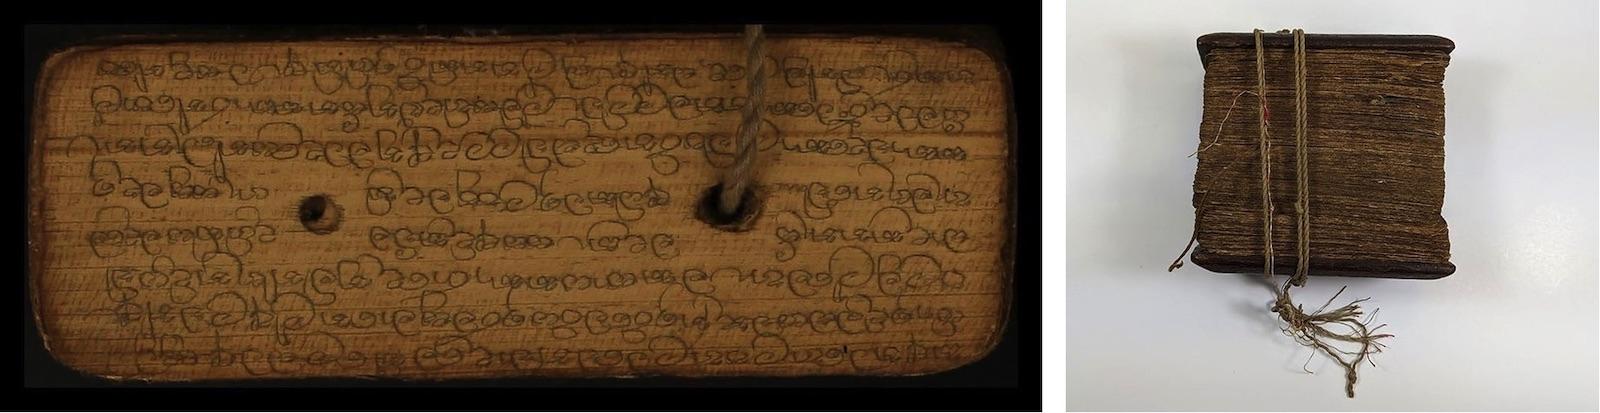 A palm leaf page with Sinhala writing.